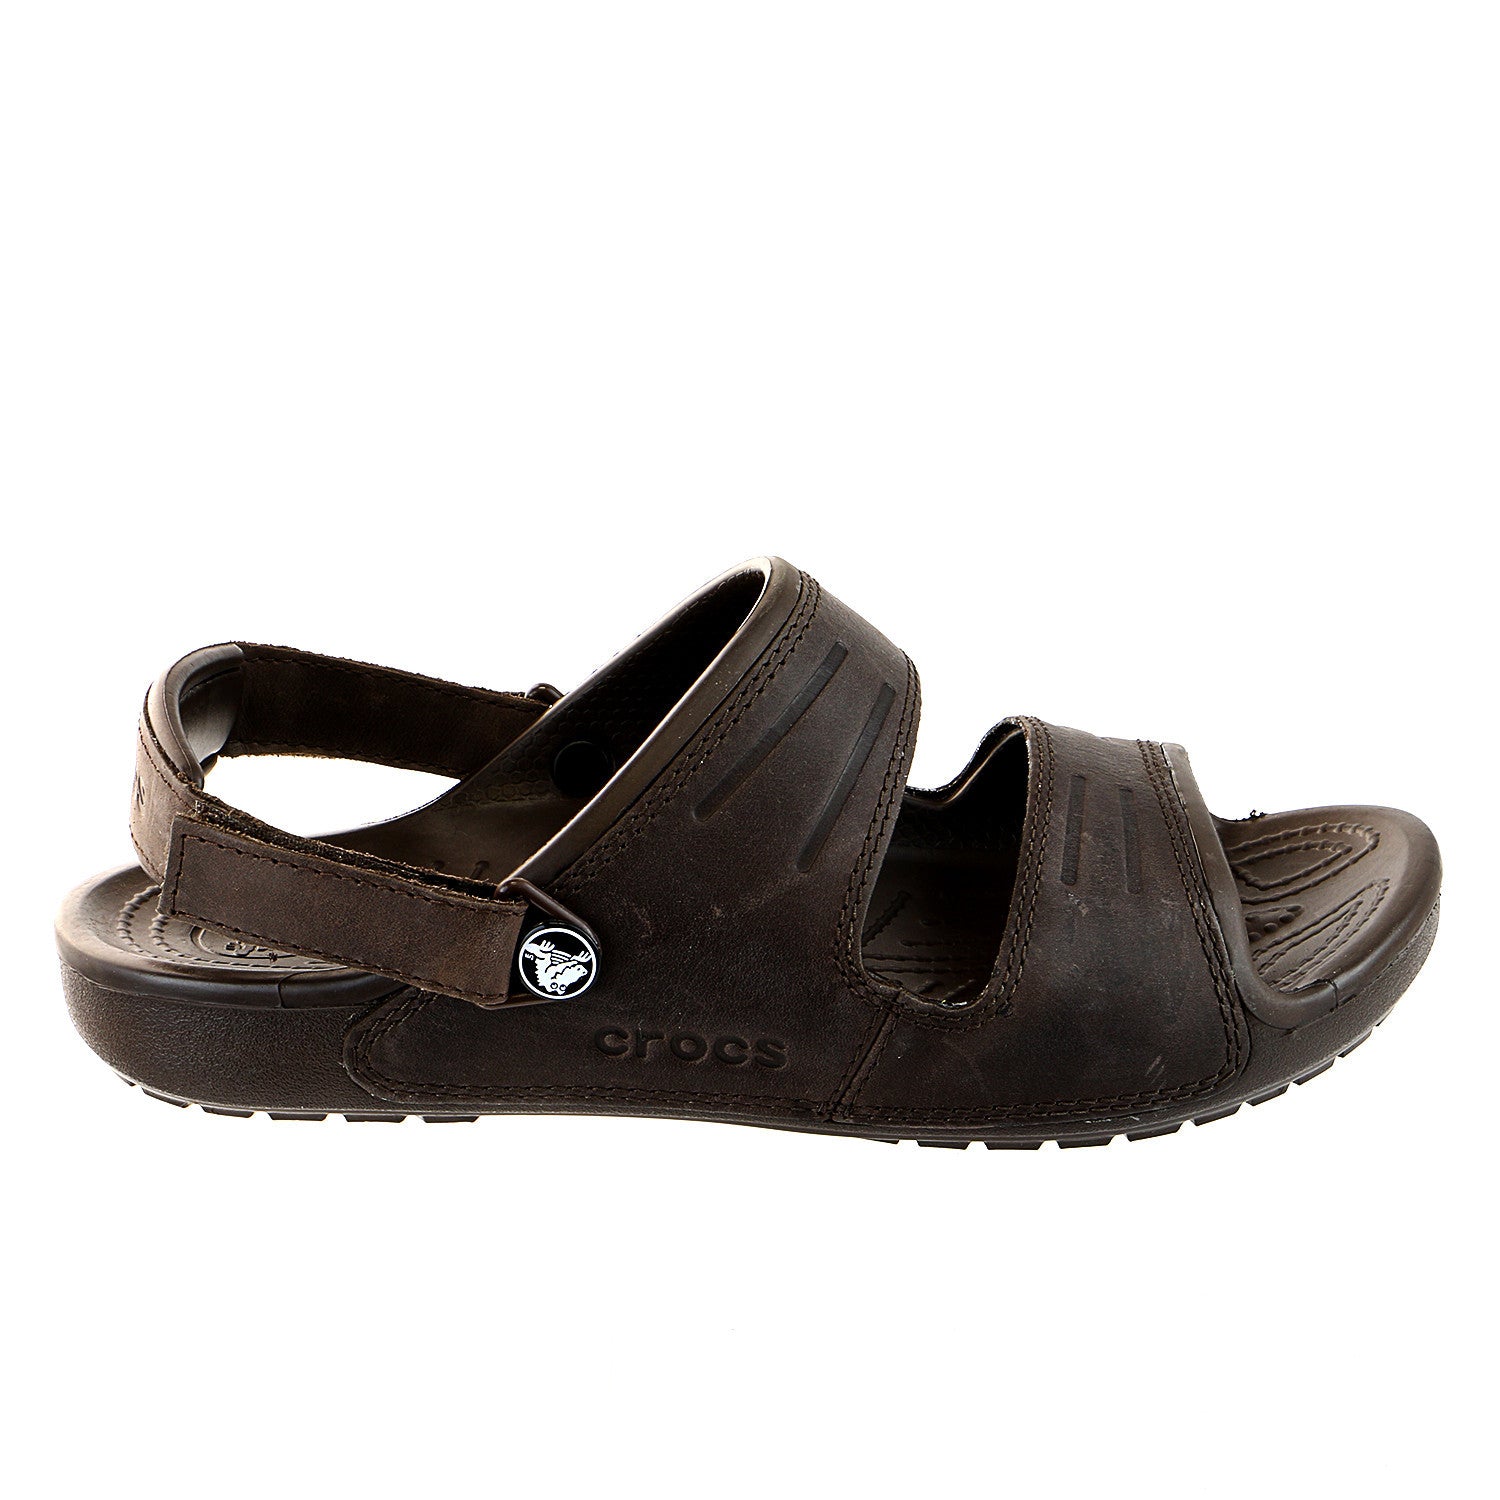 Buy crocs Women Black Heels Sandal 5_UK at Amazon.in